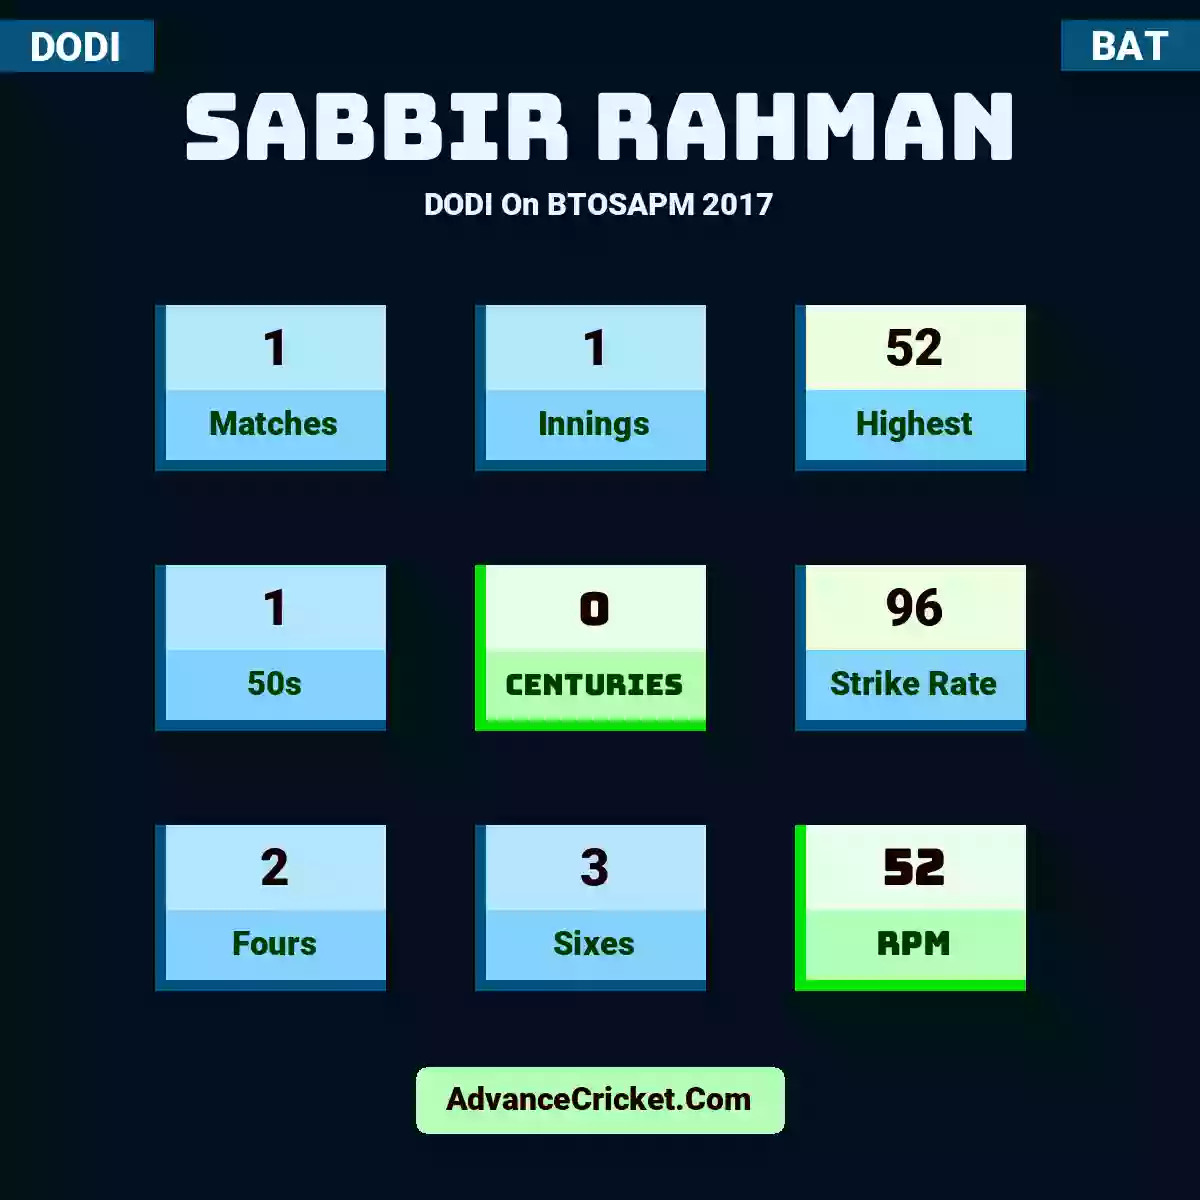 Sabbir Rahman DODI  On BTOSAPM 2017, Sabbir Rahman played 1 matches, scored 52 runs as highest, 1 half-centuries, and 0 centuries, with a strike rate of 96. S.Rahman hit 2 fours and 3 sixes, with an RPM of 52.